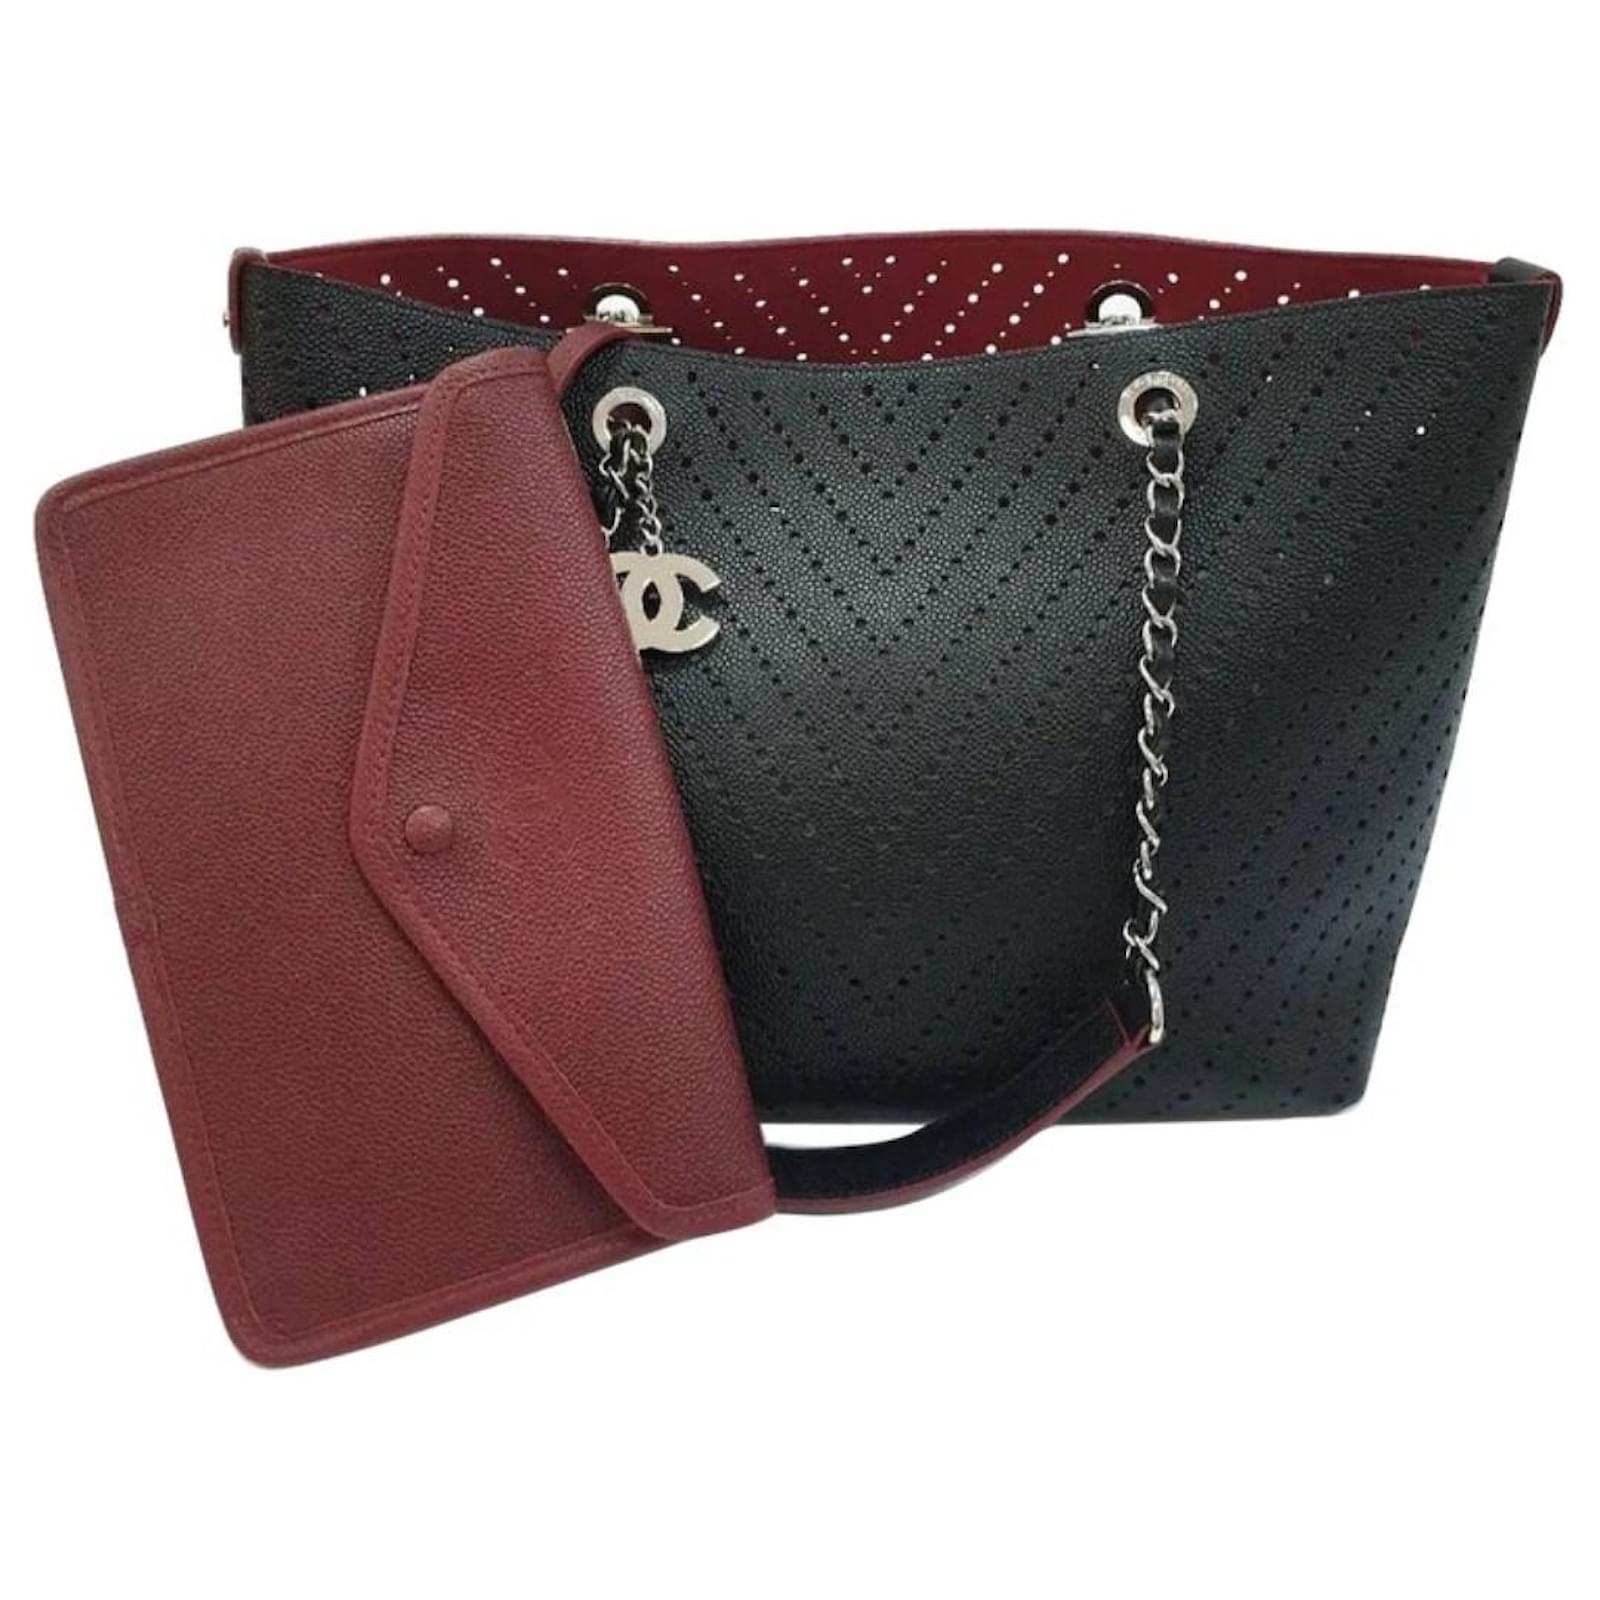 Handbags Chanel Chanel Perforated Black Caviar Chain Shopping Tote Bag